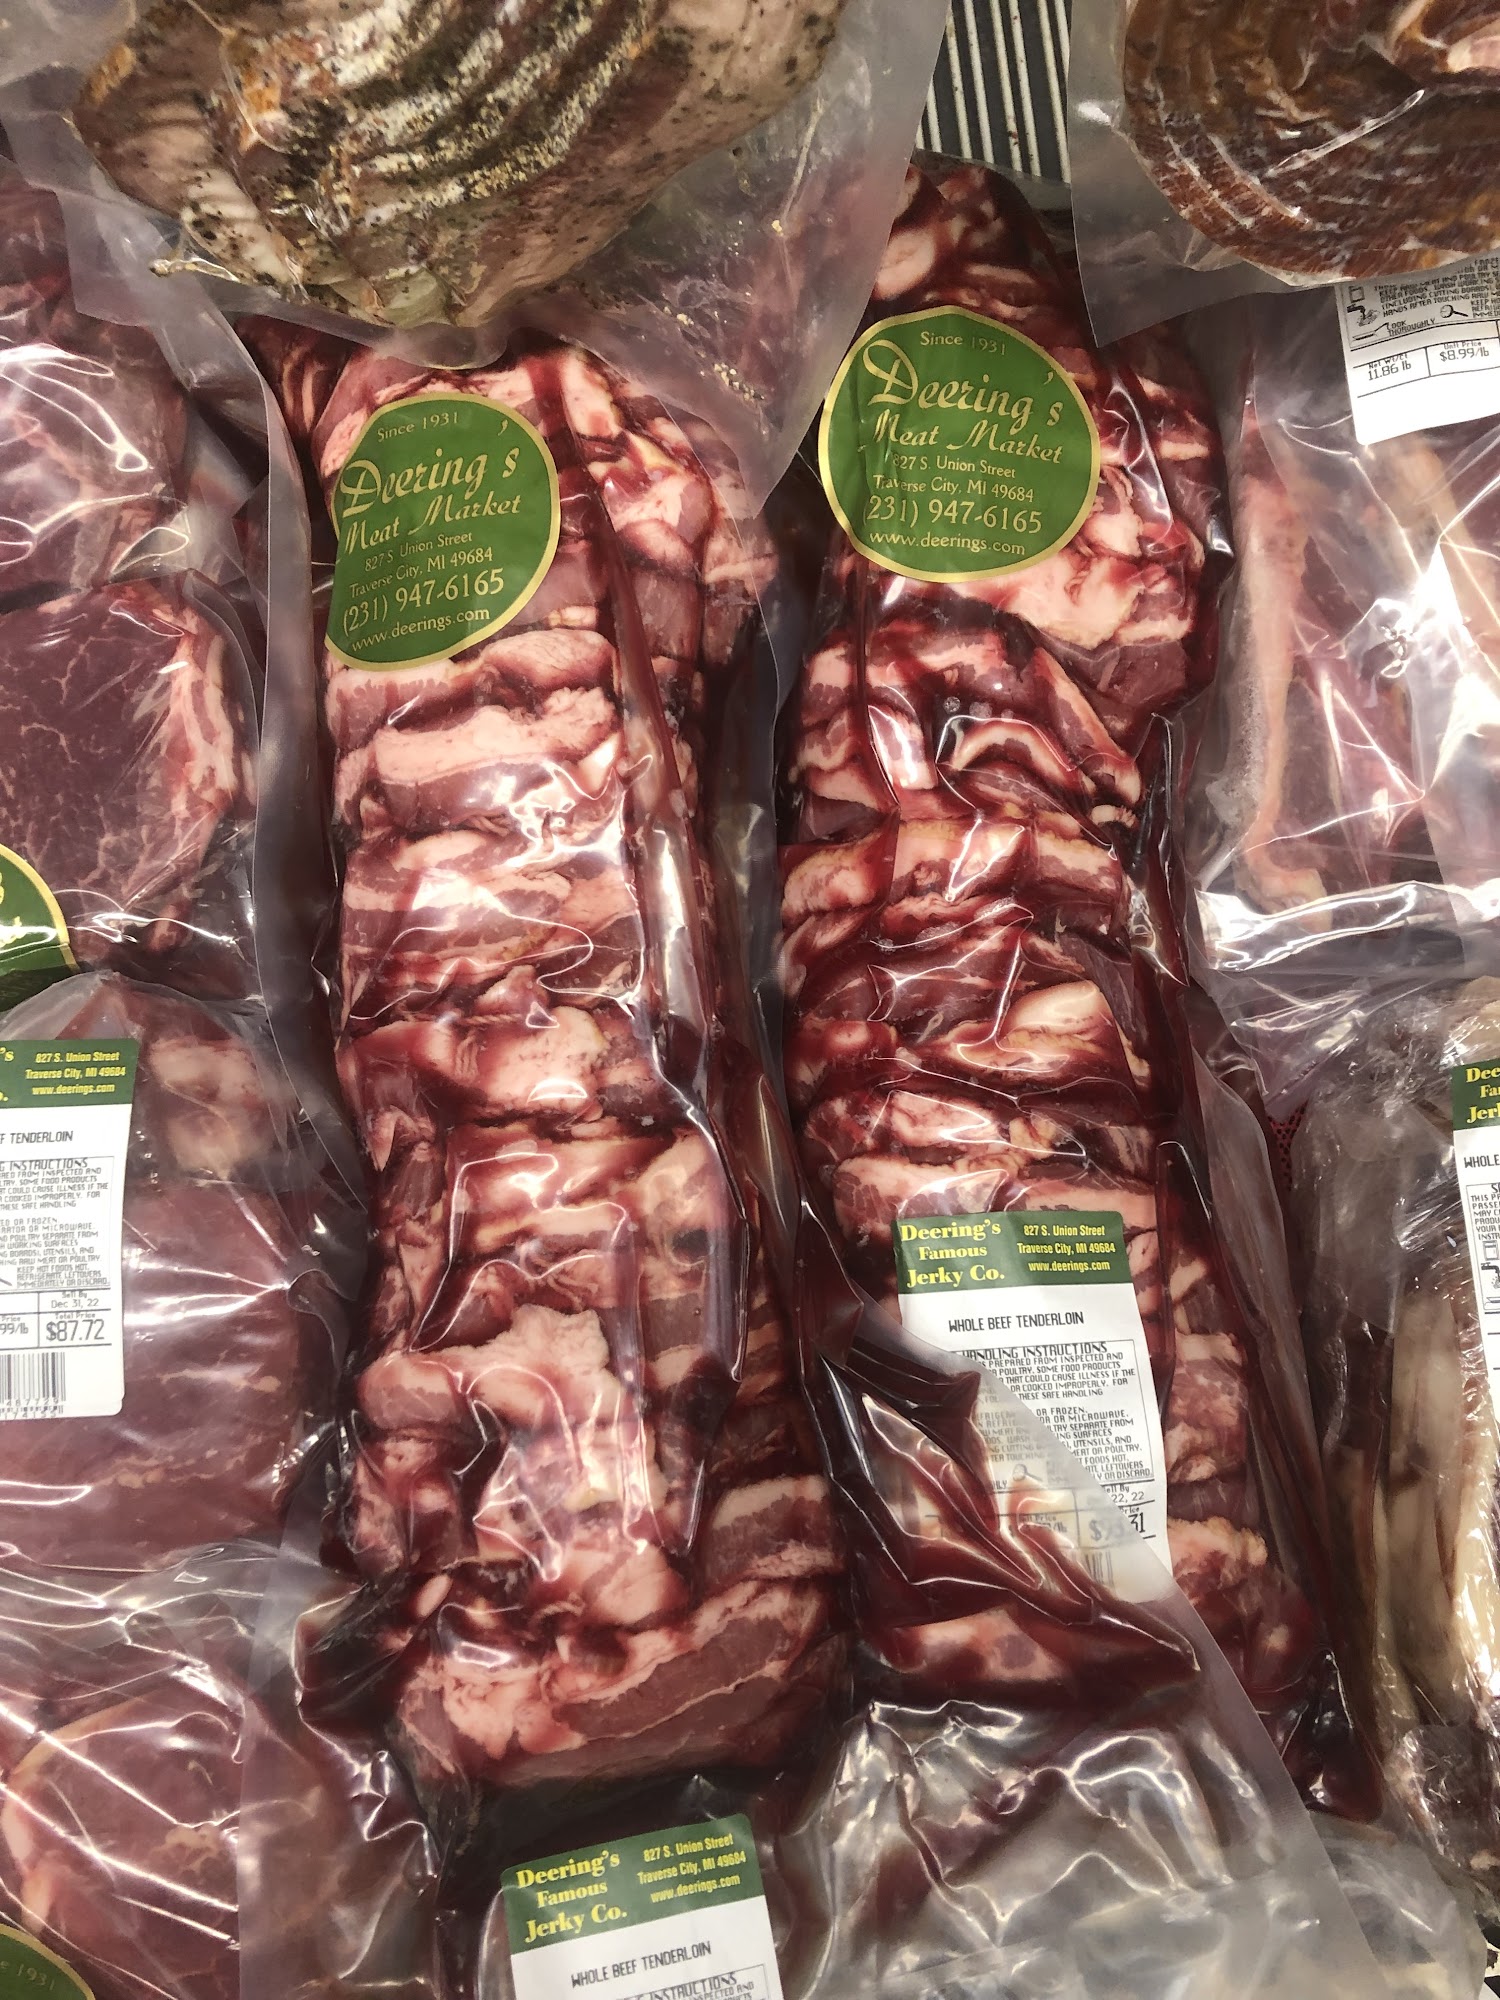 Deering meat market